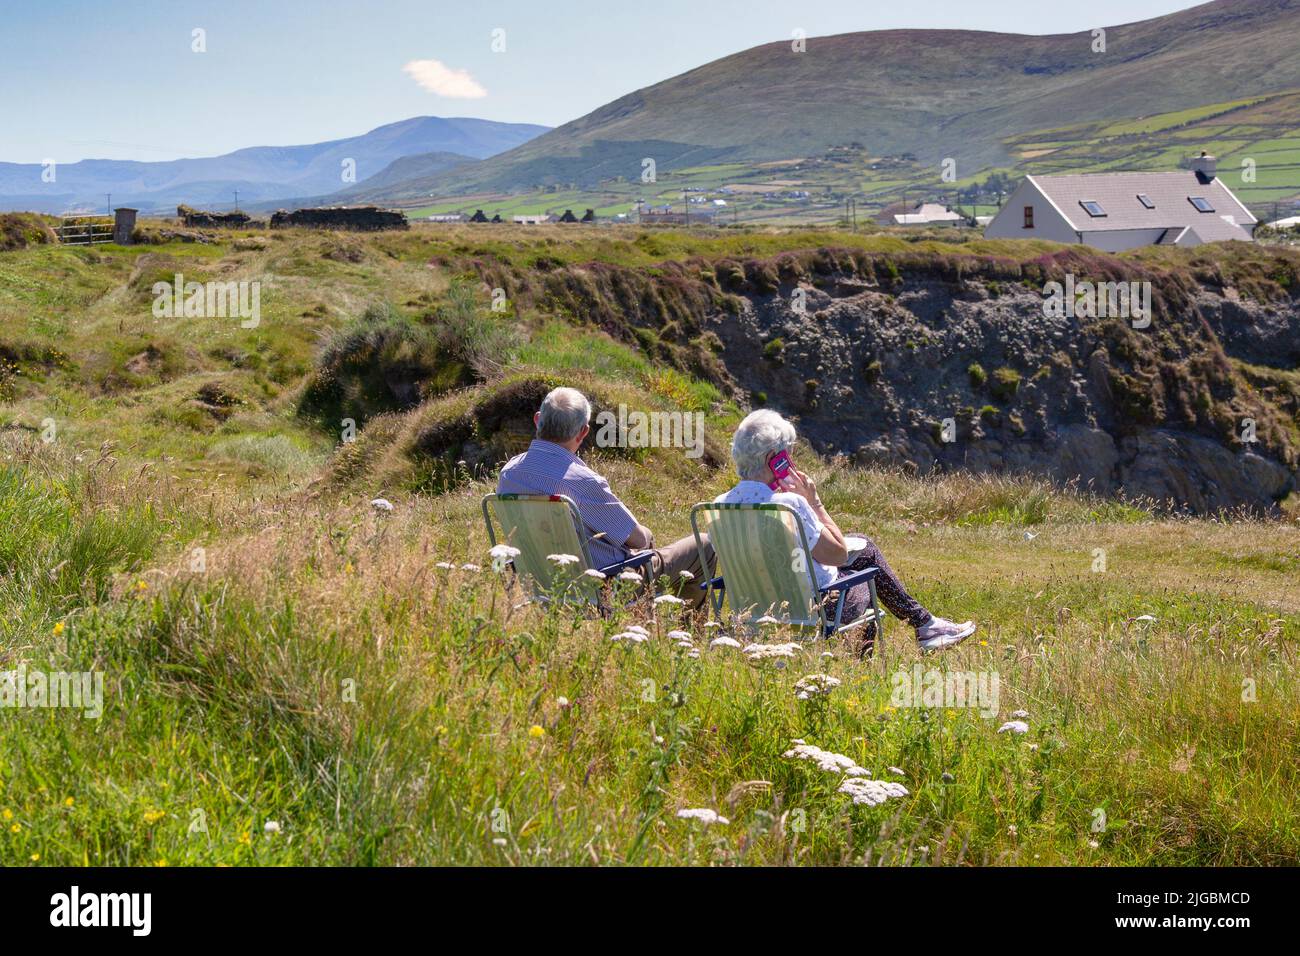 Senior couple sitting on garden chairs in long grass, Valentia Island, Kerry, Ireland Stock Photo